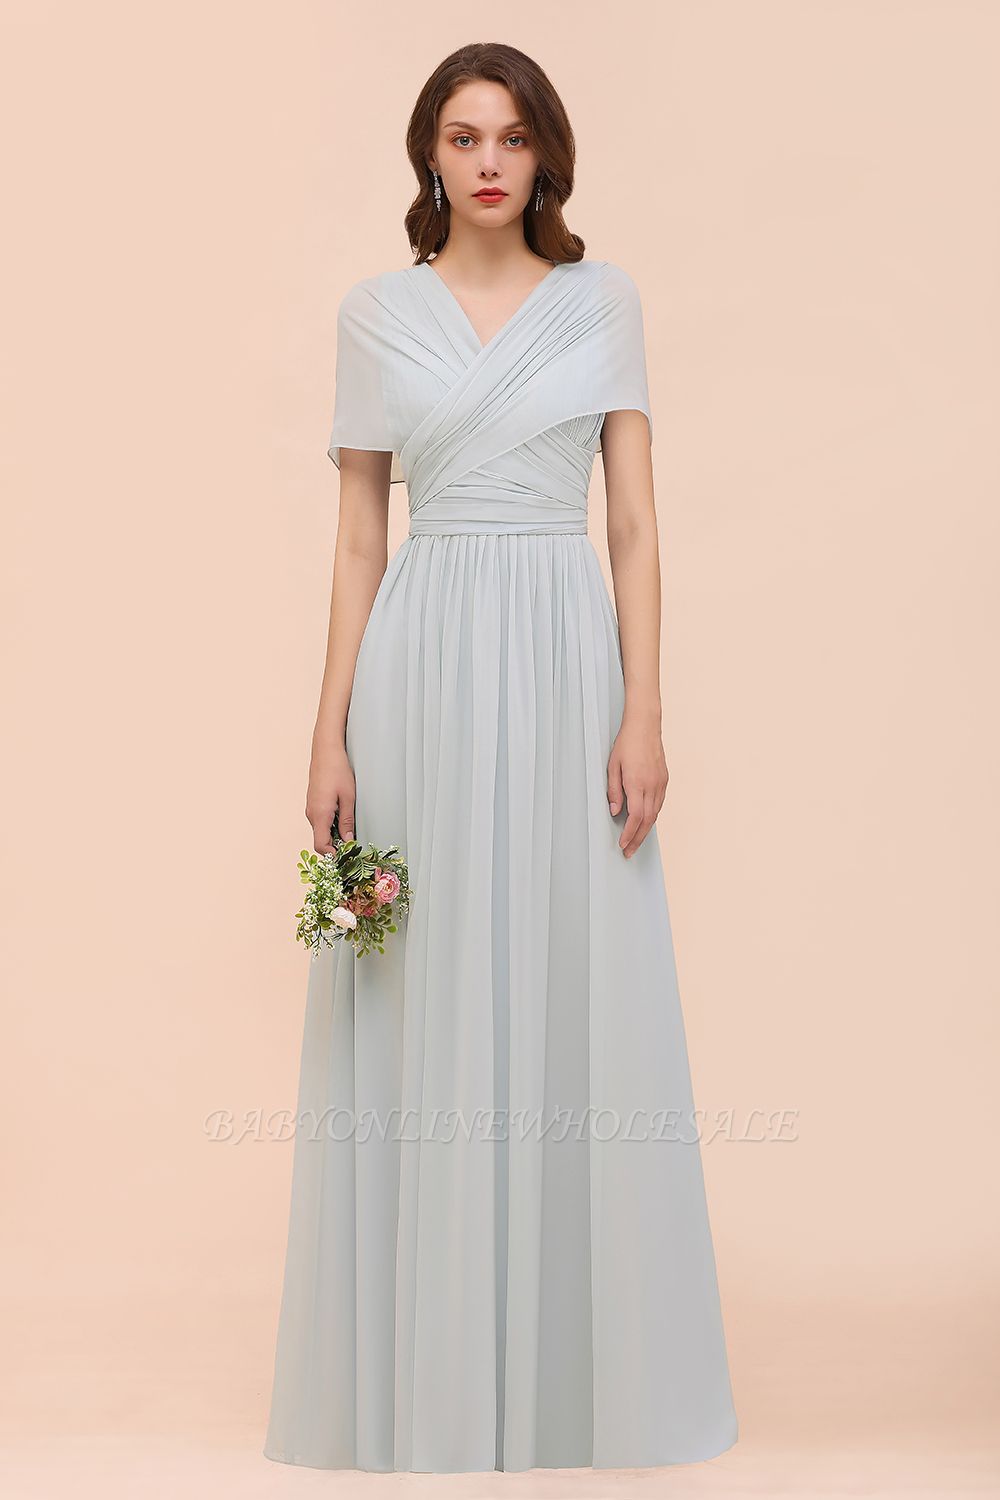 Infinity Bridesmaid Dress Soft Chiffon Aline Wedding Guest Dress Floor Length Prom Dress